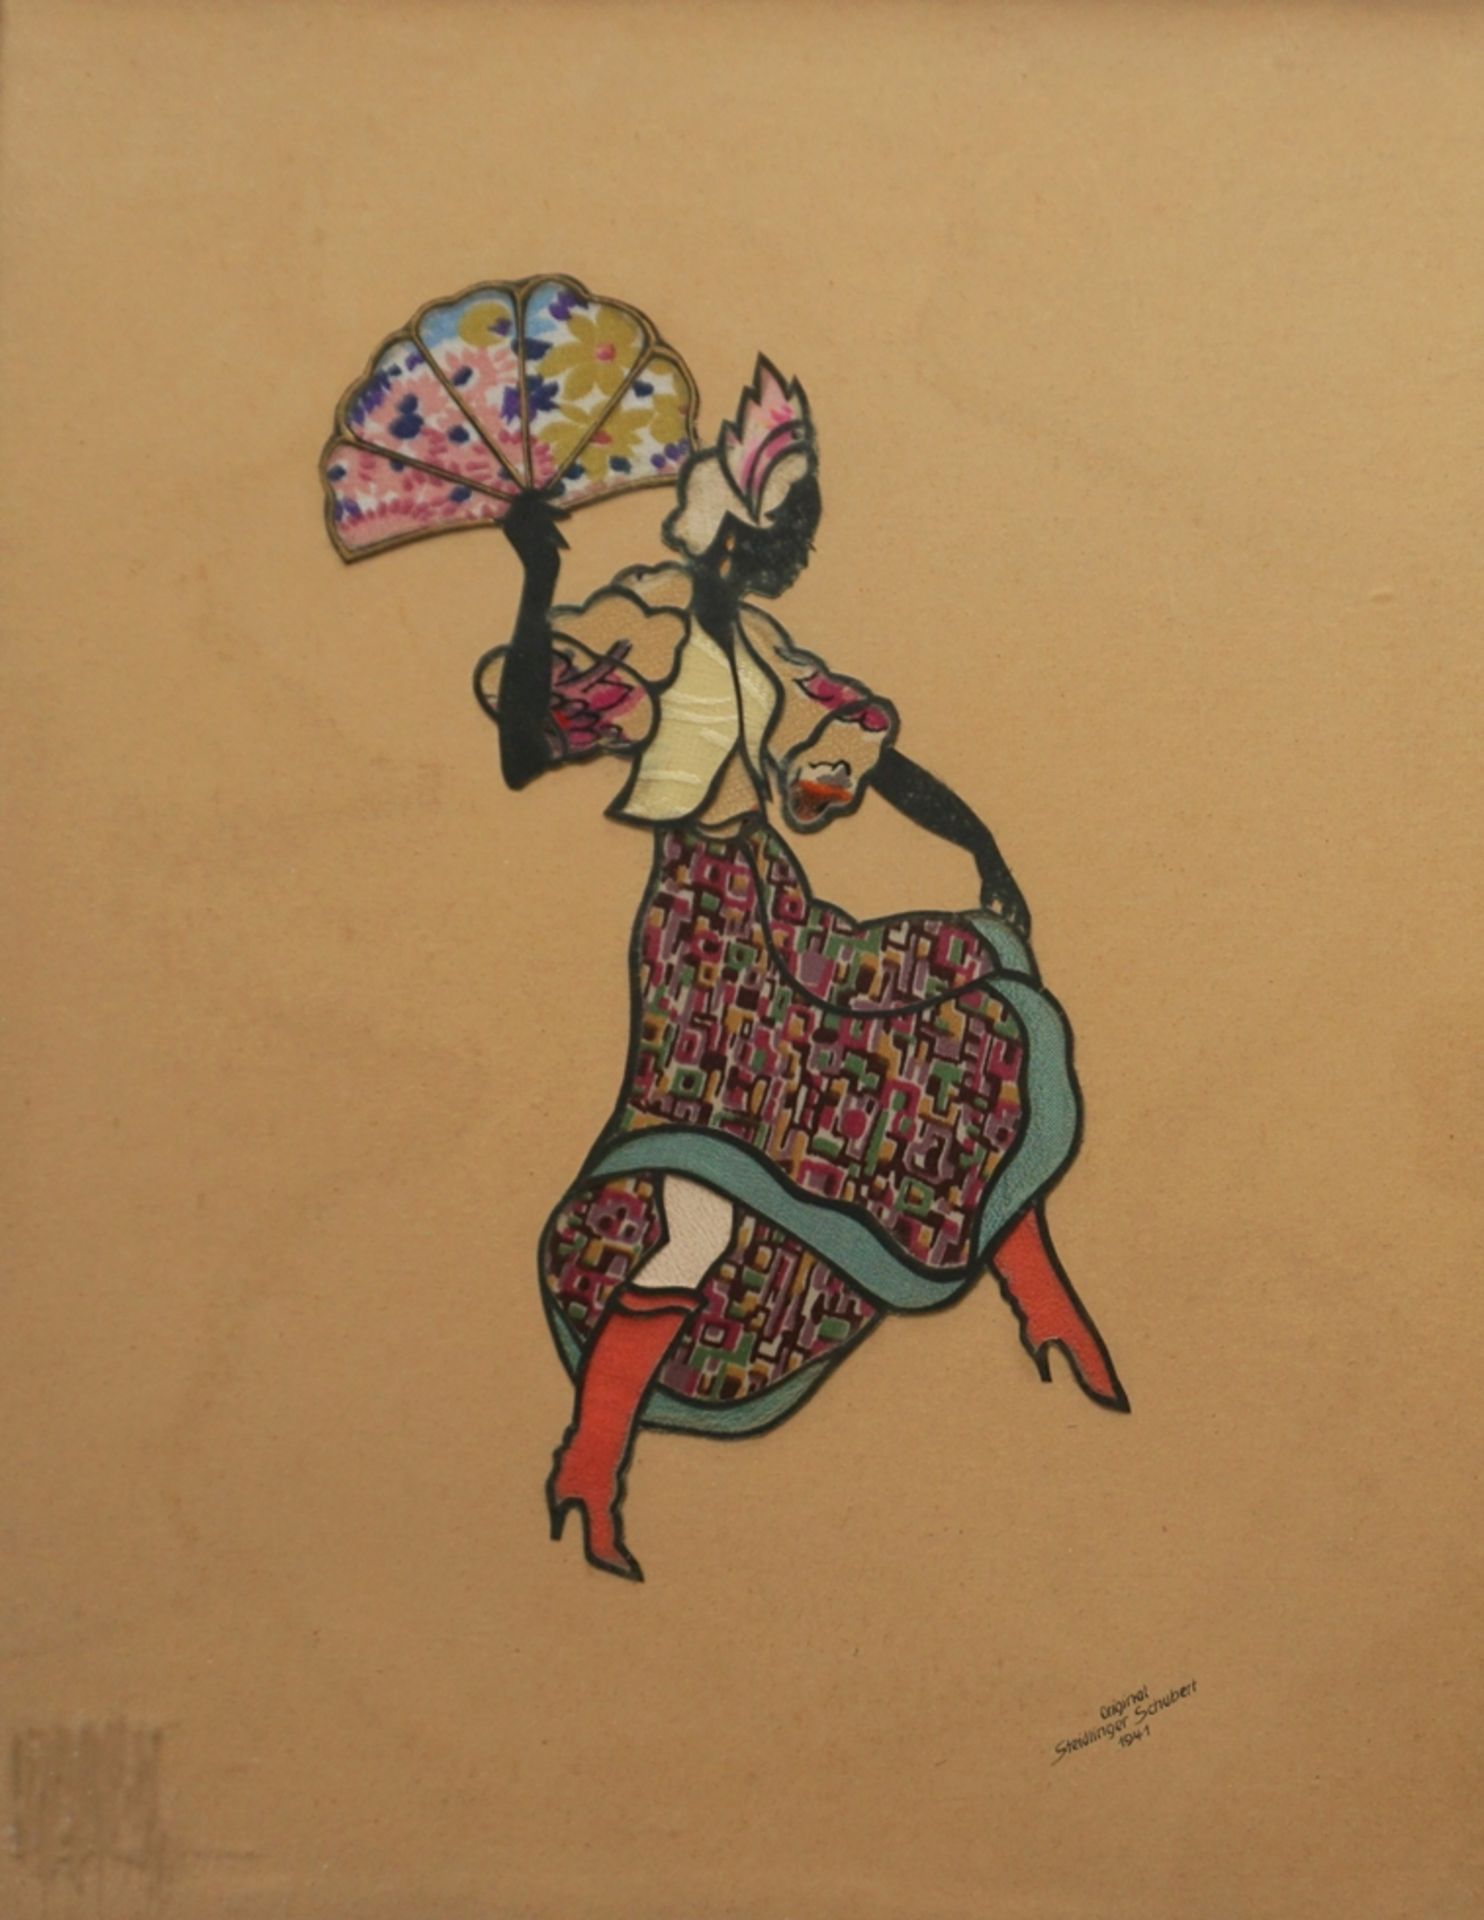 Steidlinger-Schubert, "Flamencotänzerin", 1941, Textilcollage